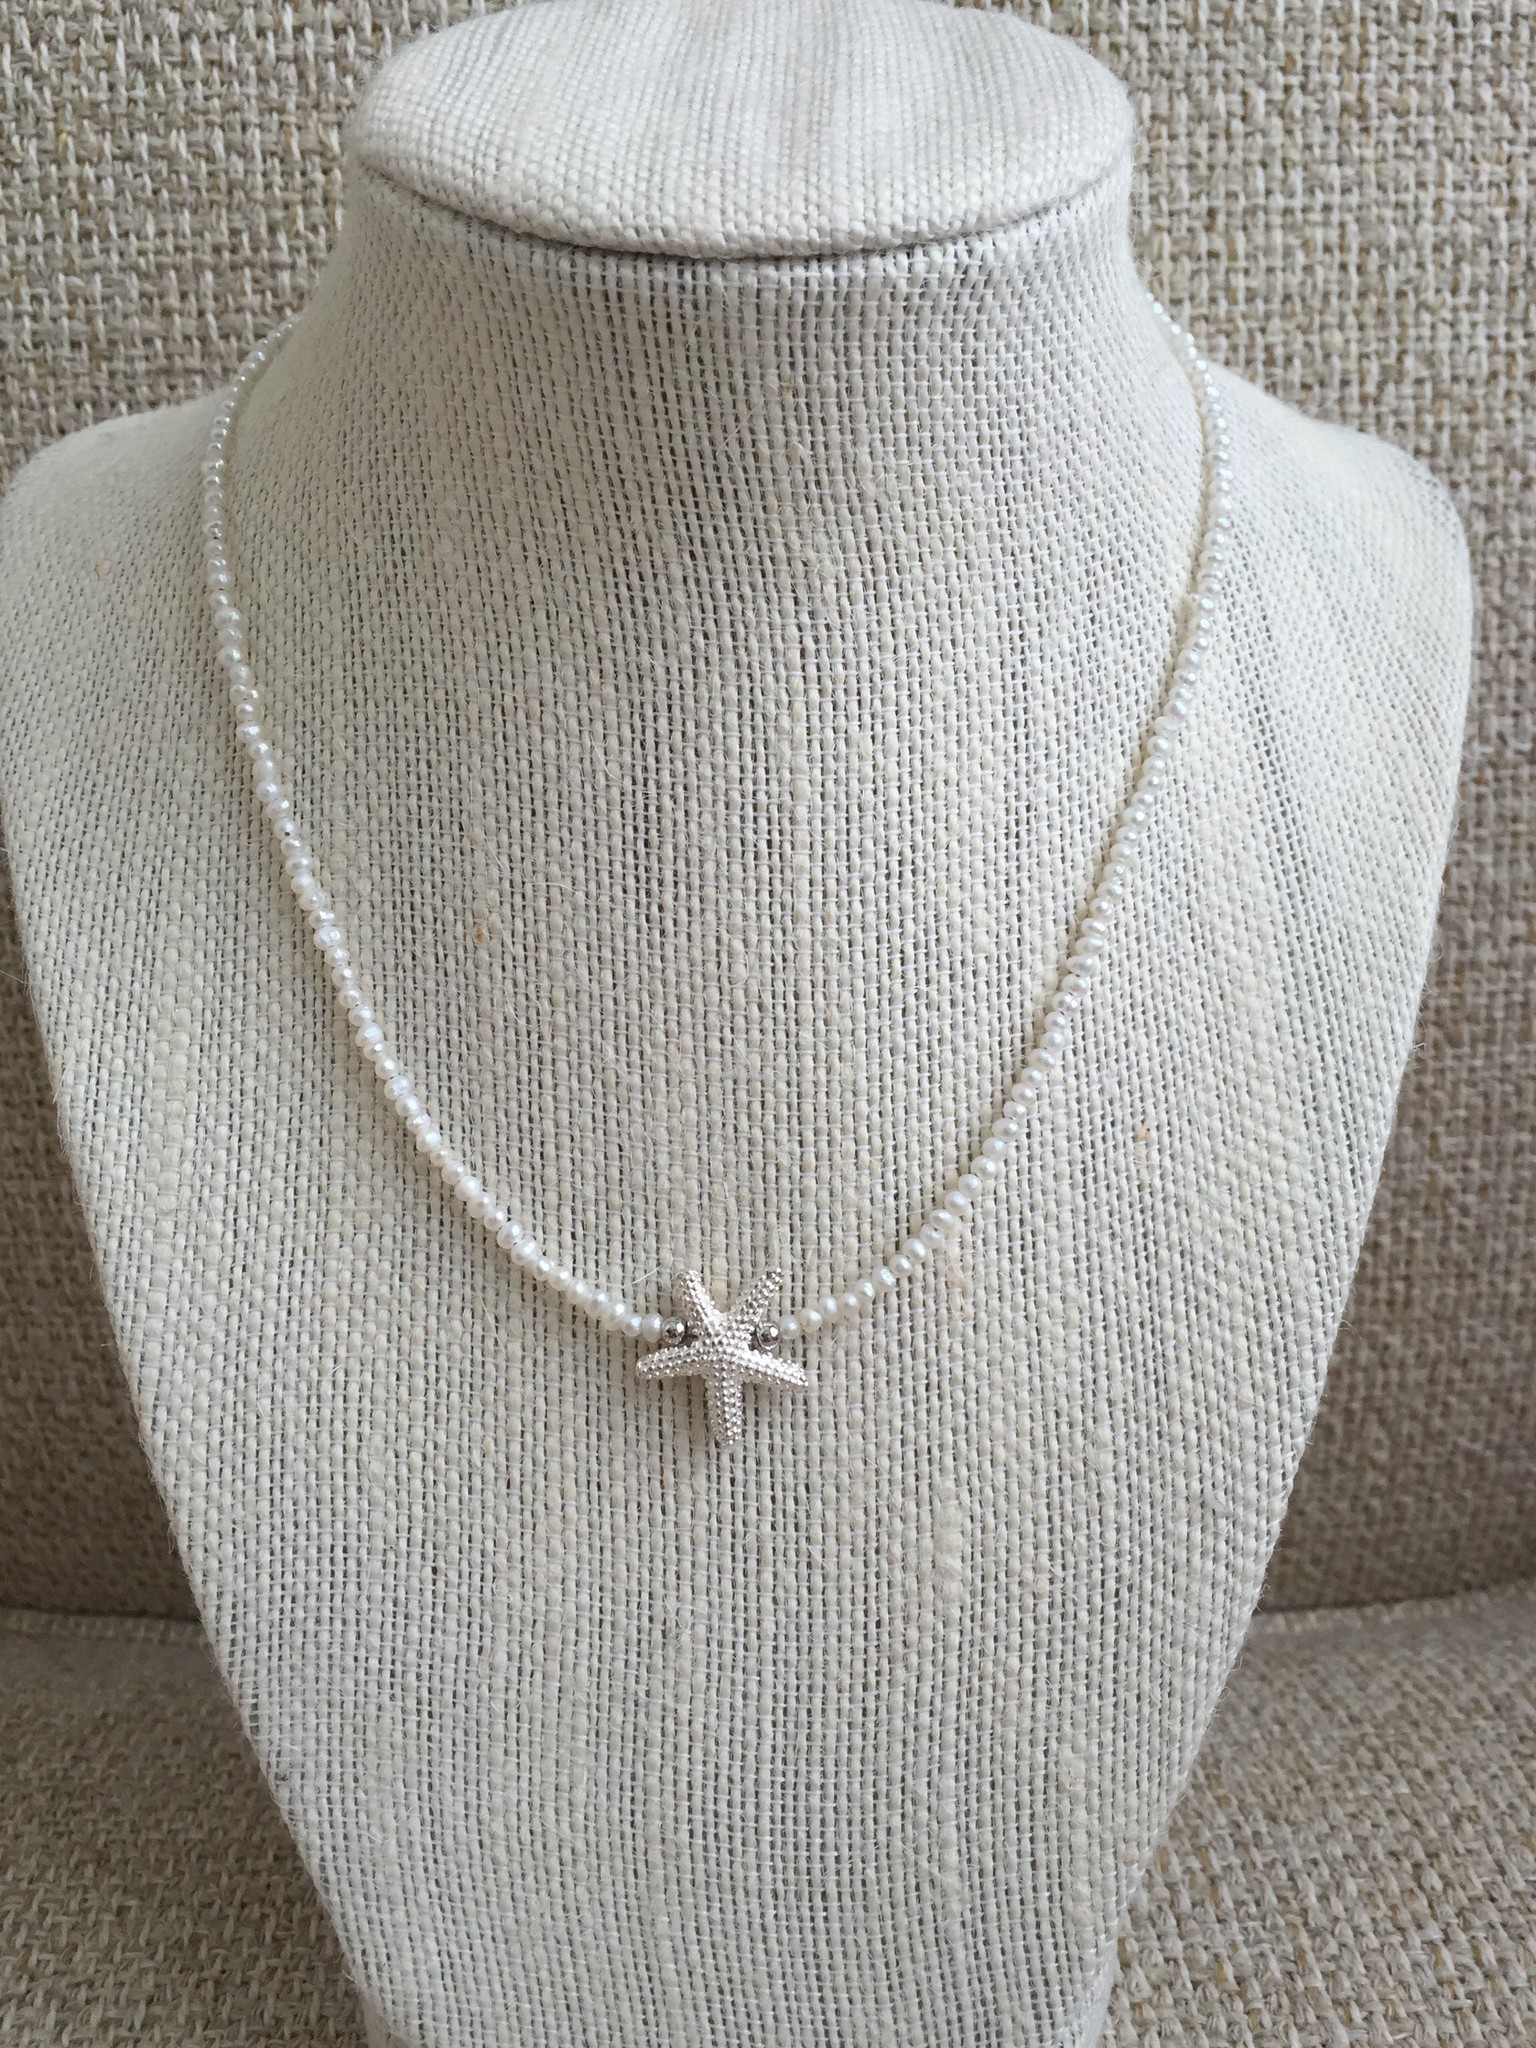 Studio G Pearl Starfish Necklace